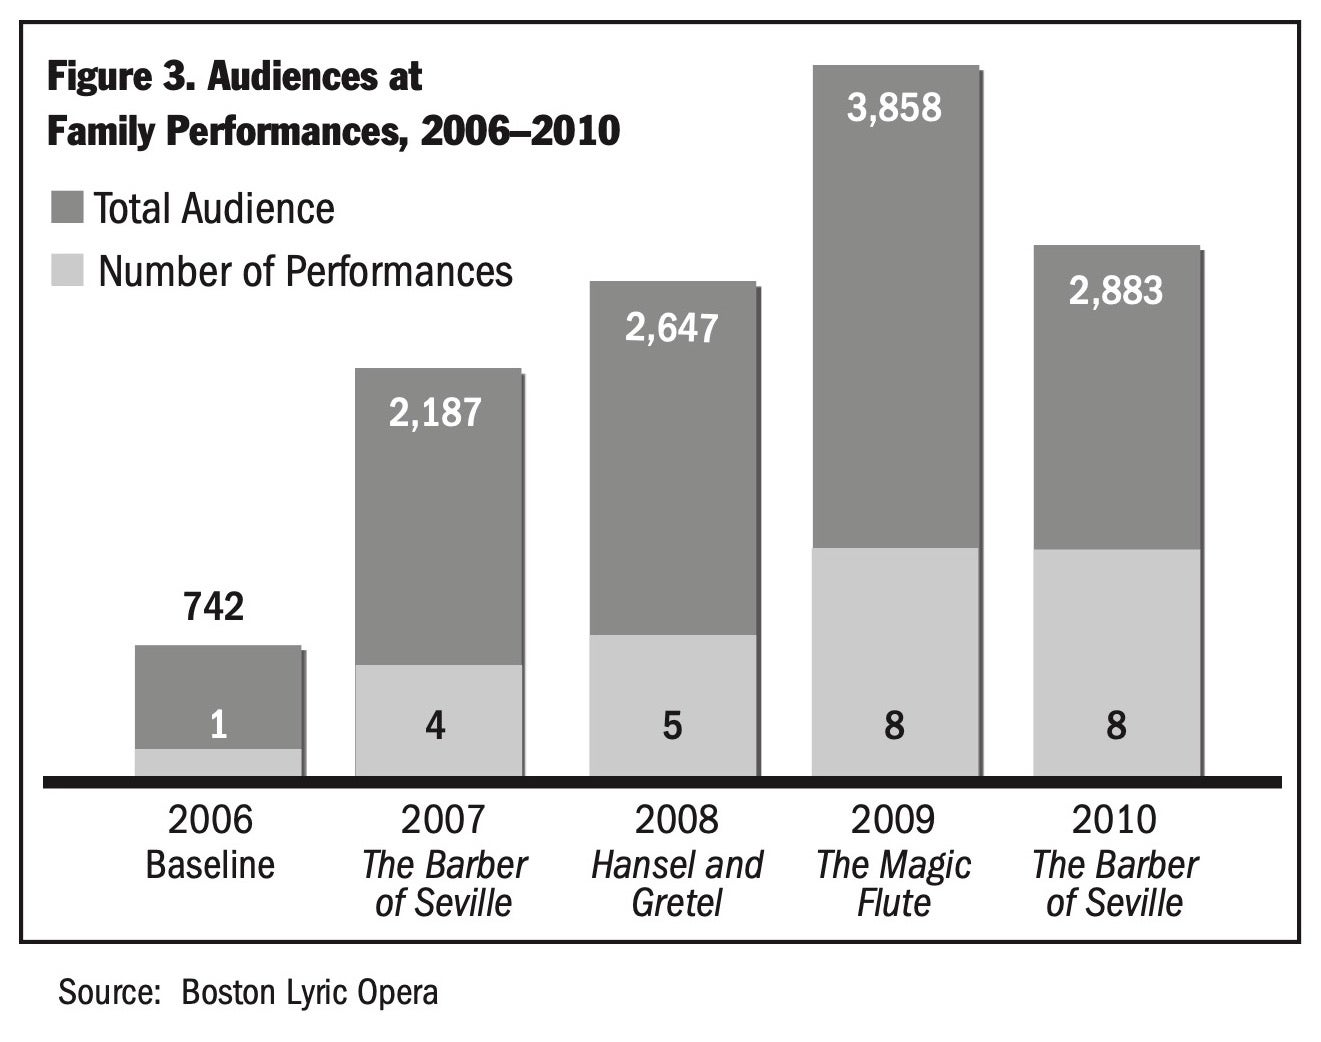 Figure 3. Audiences at Family Performances, 2006-2010